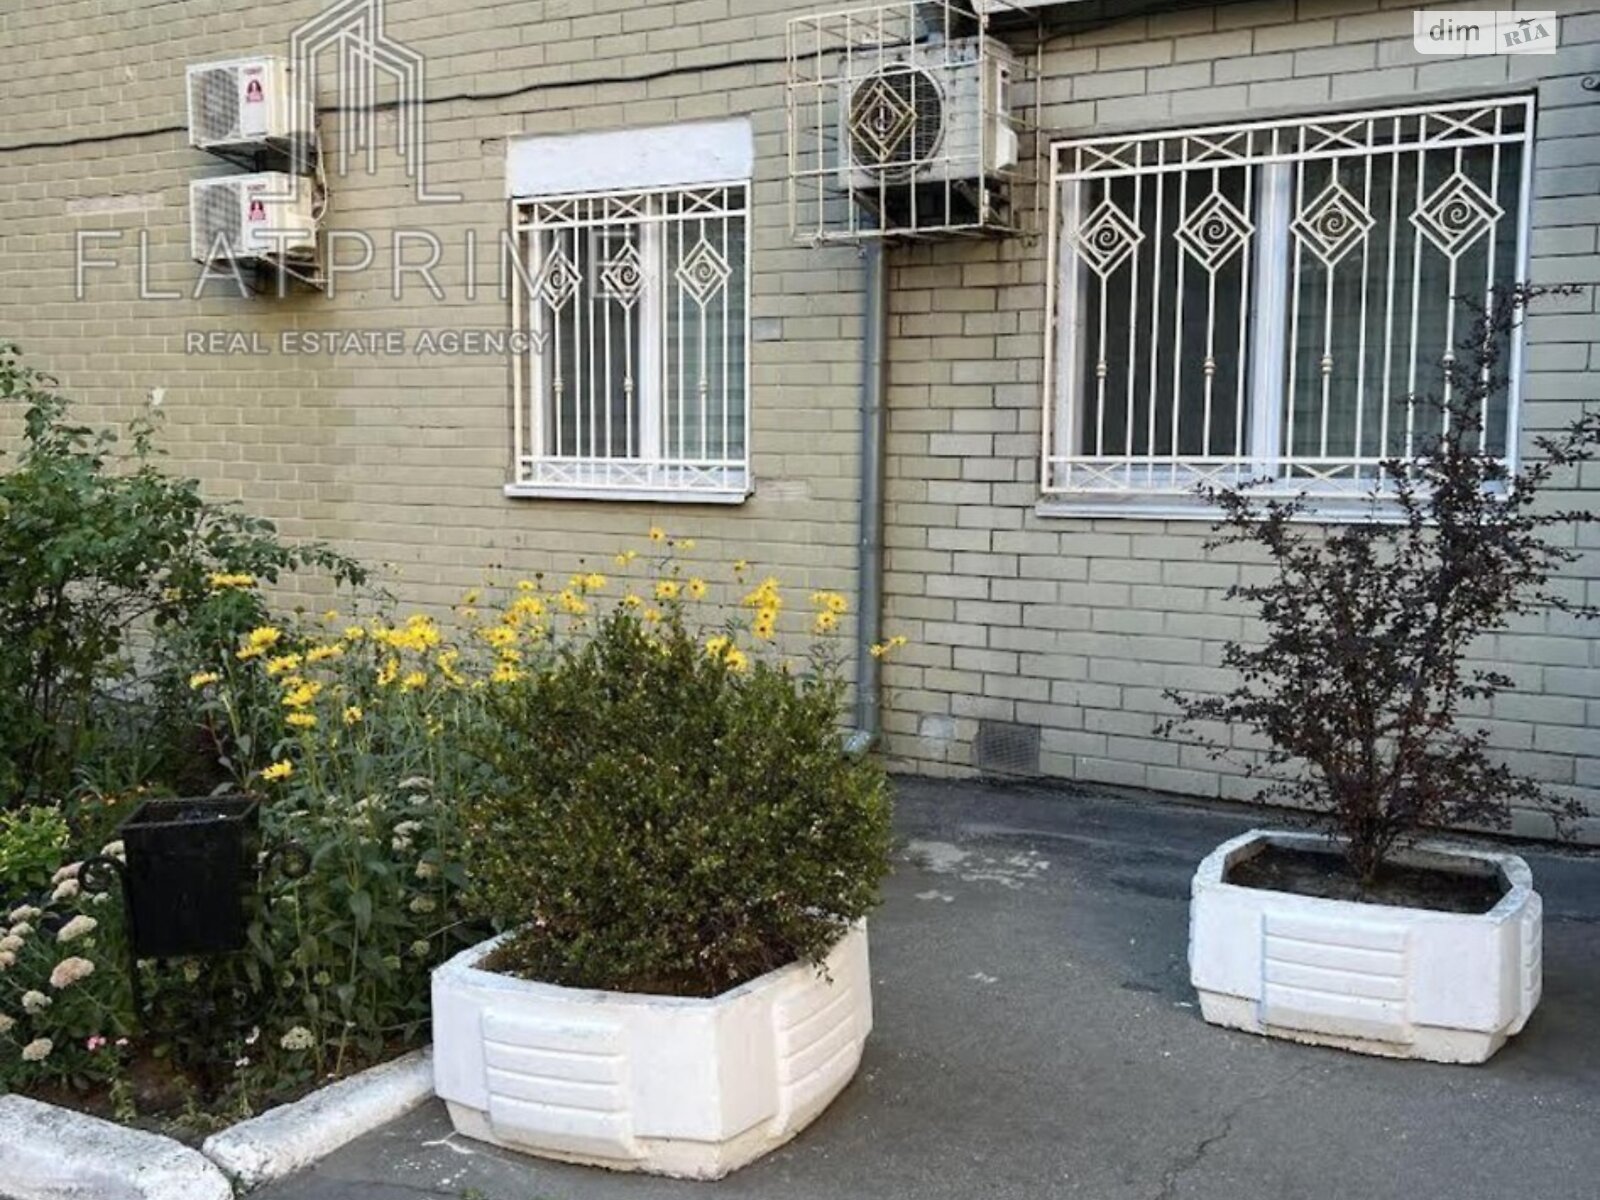 Продажа трехкомнатной квартиры в Киеве, на ул. Антоновича 103А, район Голосеевский фото 1